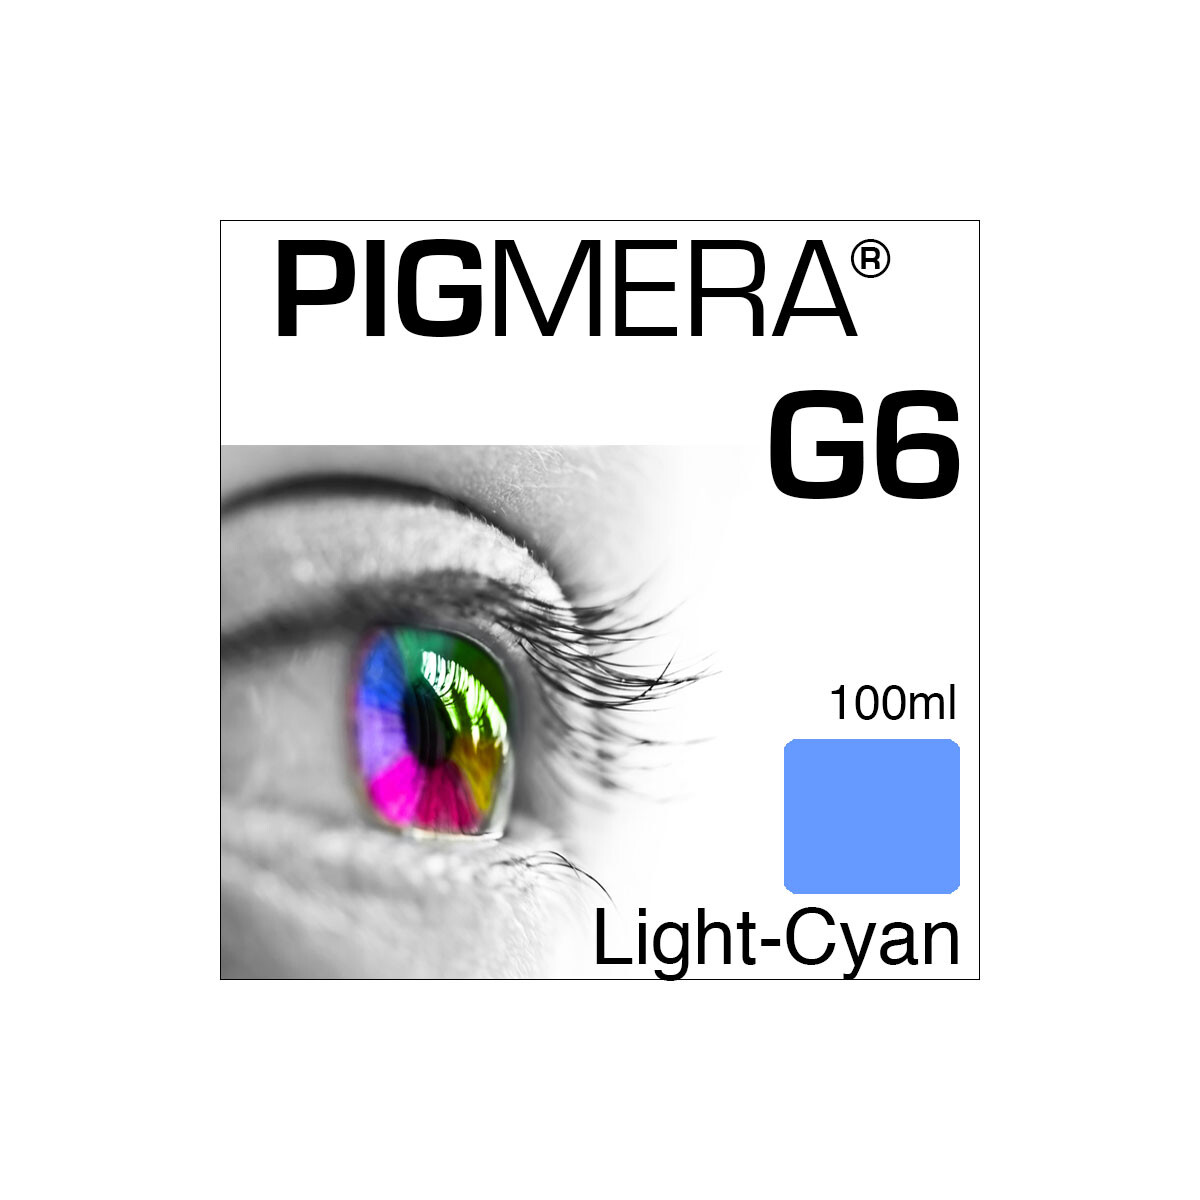 farbenwerk Pigmera G6 Flasche Light-Cyan 100ml